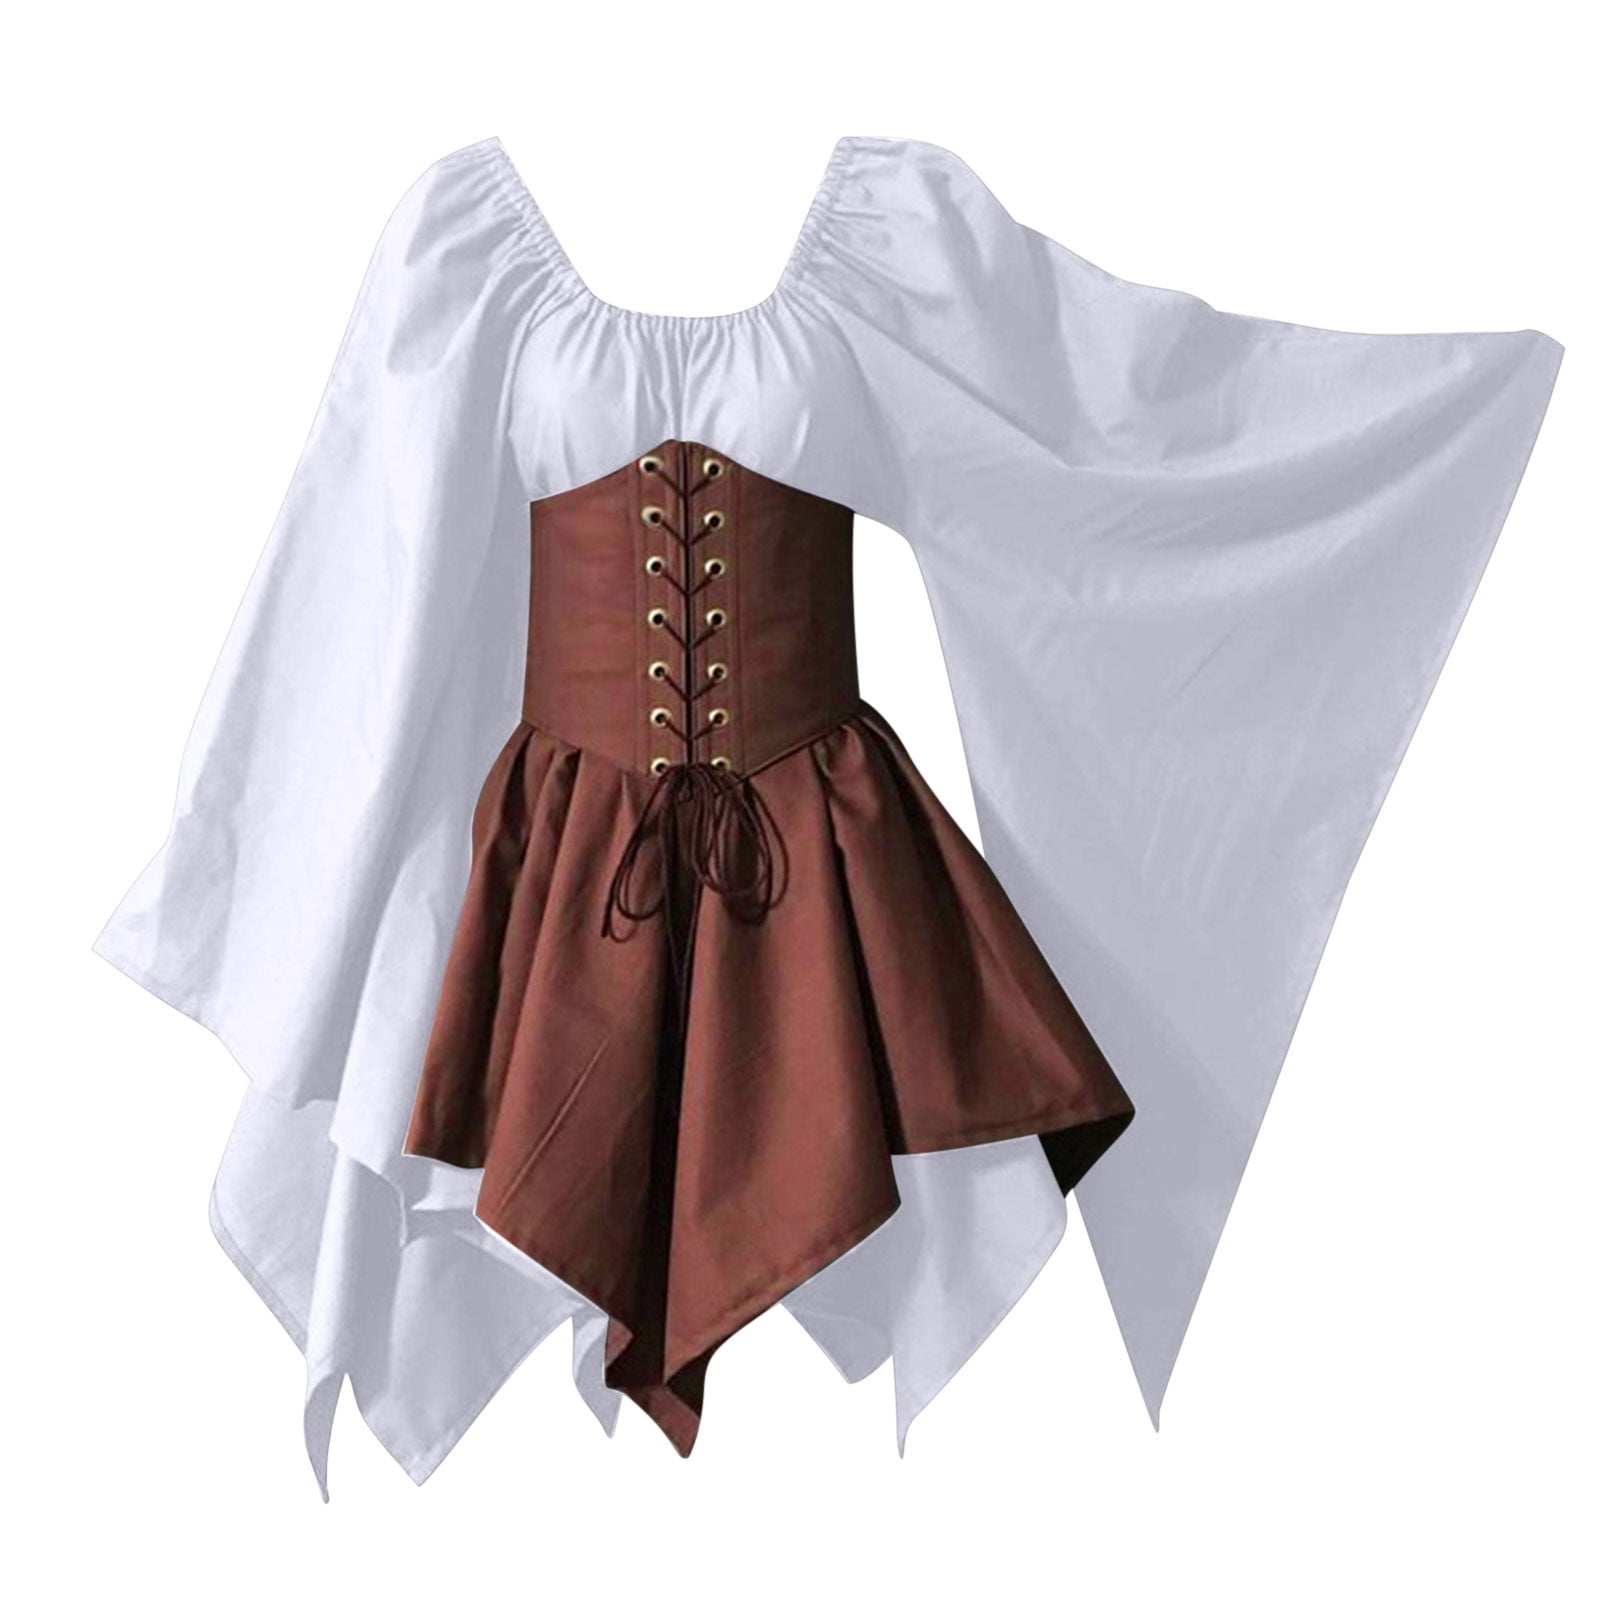 RYRJJ Women's Retro Medieval Renaissance Costume Dresses Plus Size Vintage  Flare Long Sleeve Gothic Dress with Corset Party Short Mini Dress(White,S)  